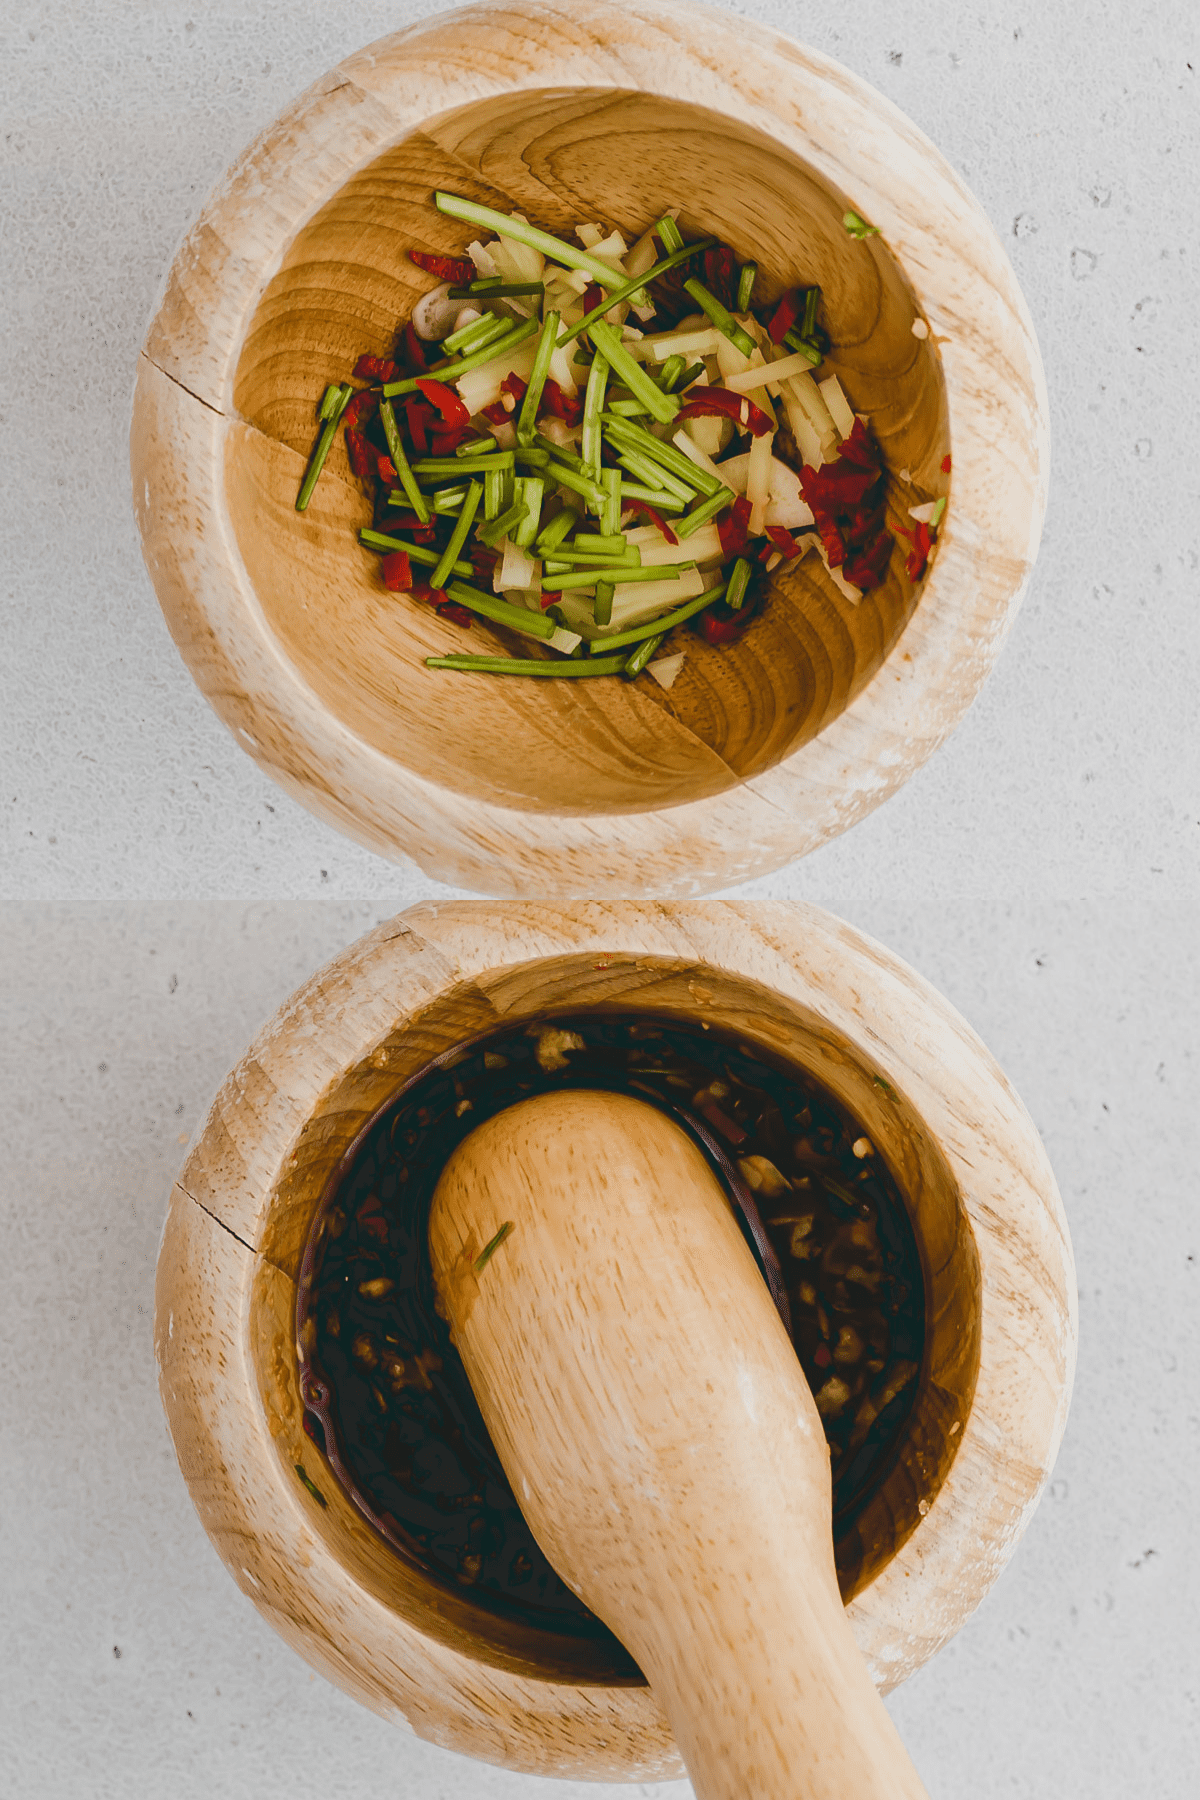 Glass Noodle Salad Recipe Step 1-2